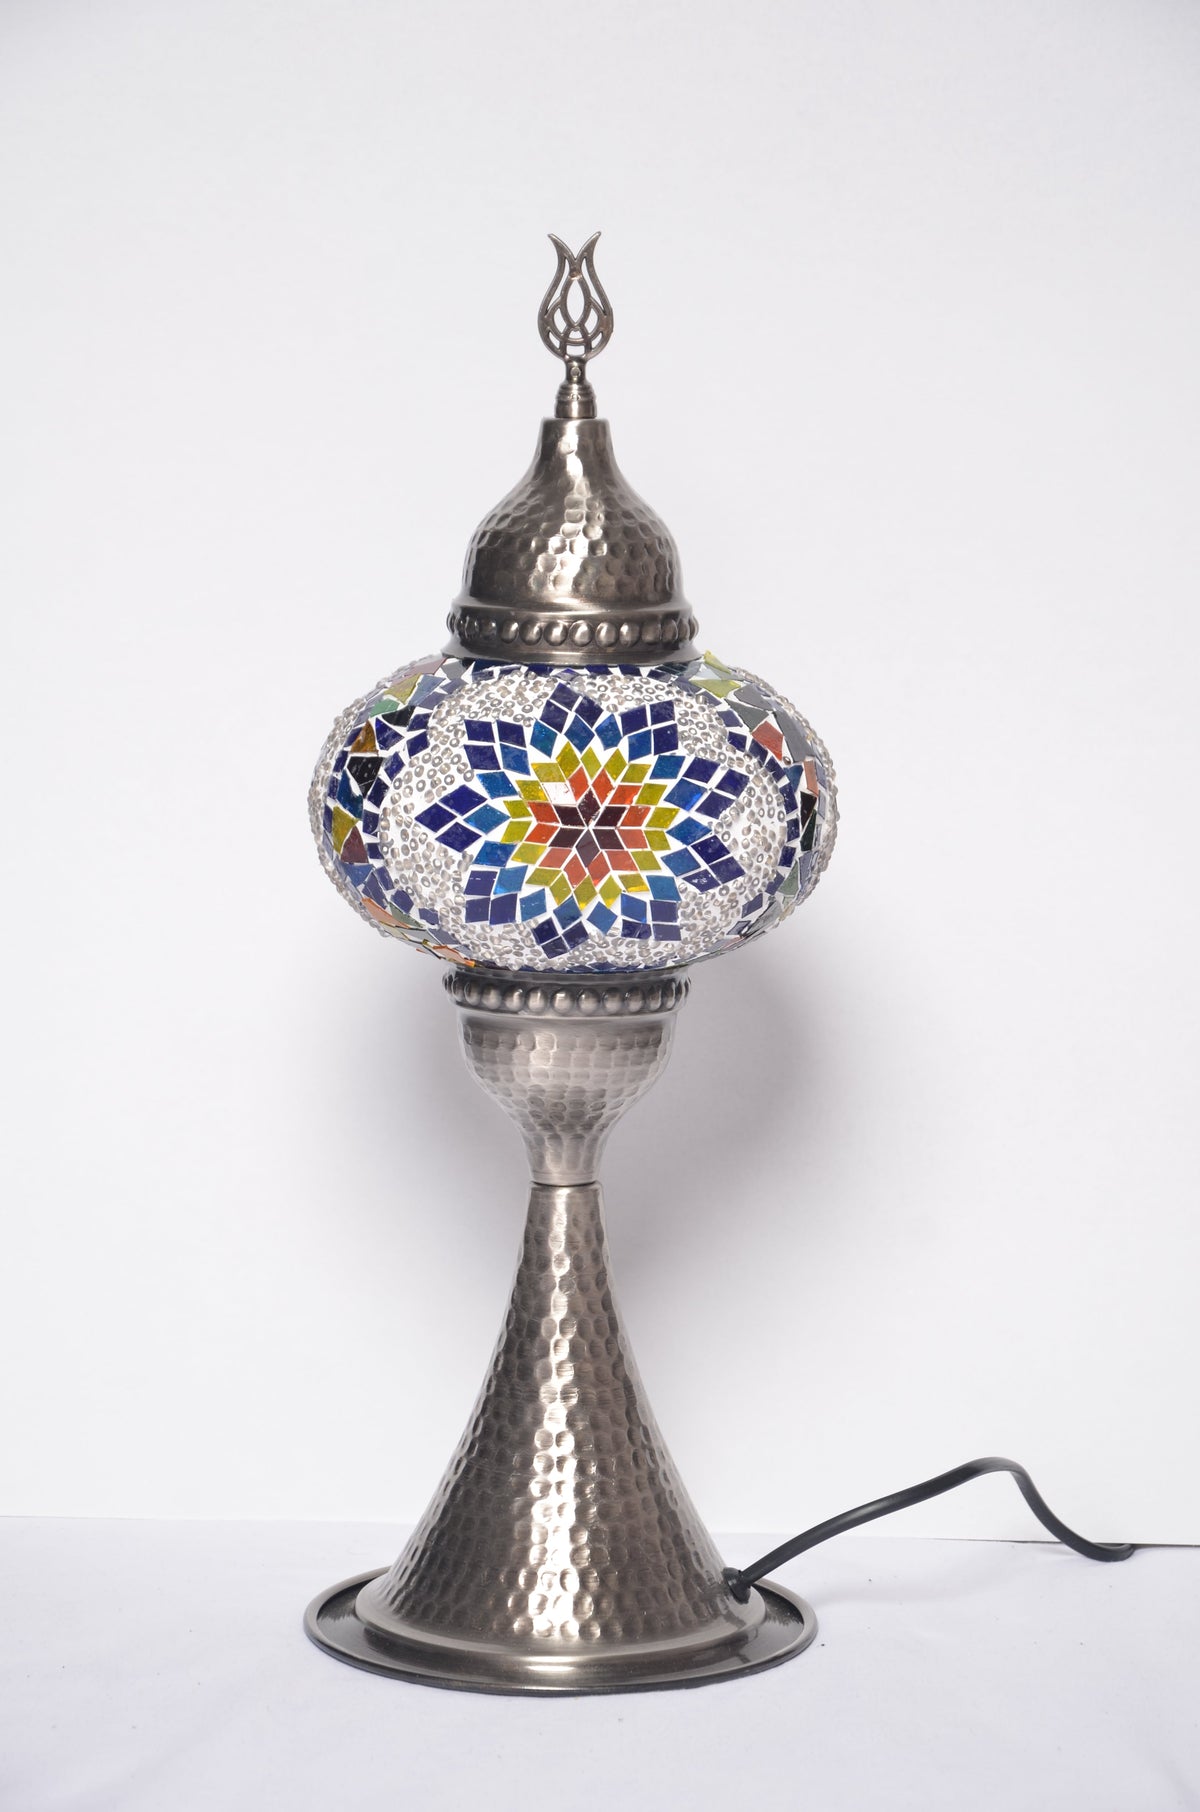 Elite Turkish Mosaic Glass Decorative Table Lamps - Multicolor Snow Flake - Unique Custom Moroccan Lamp Shades - KAFTHAN